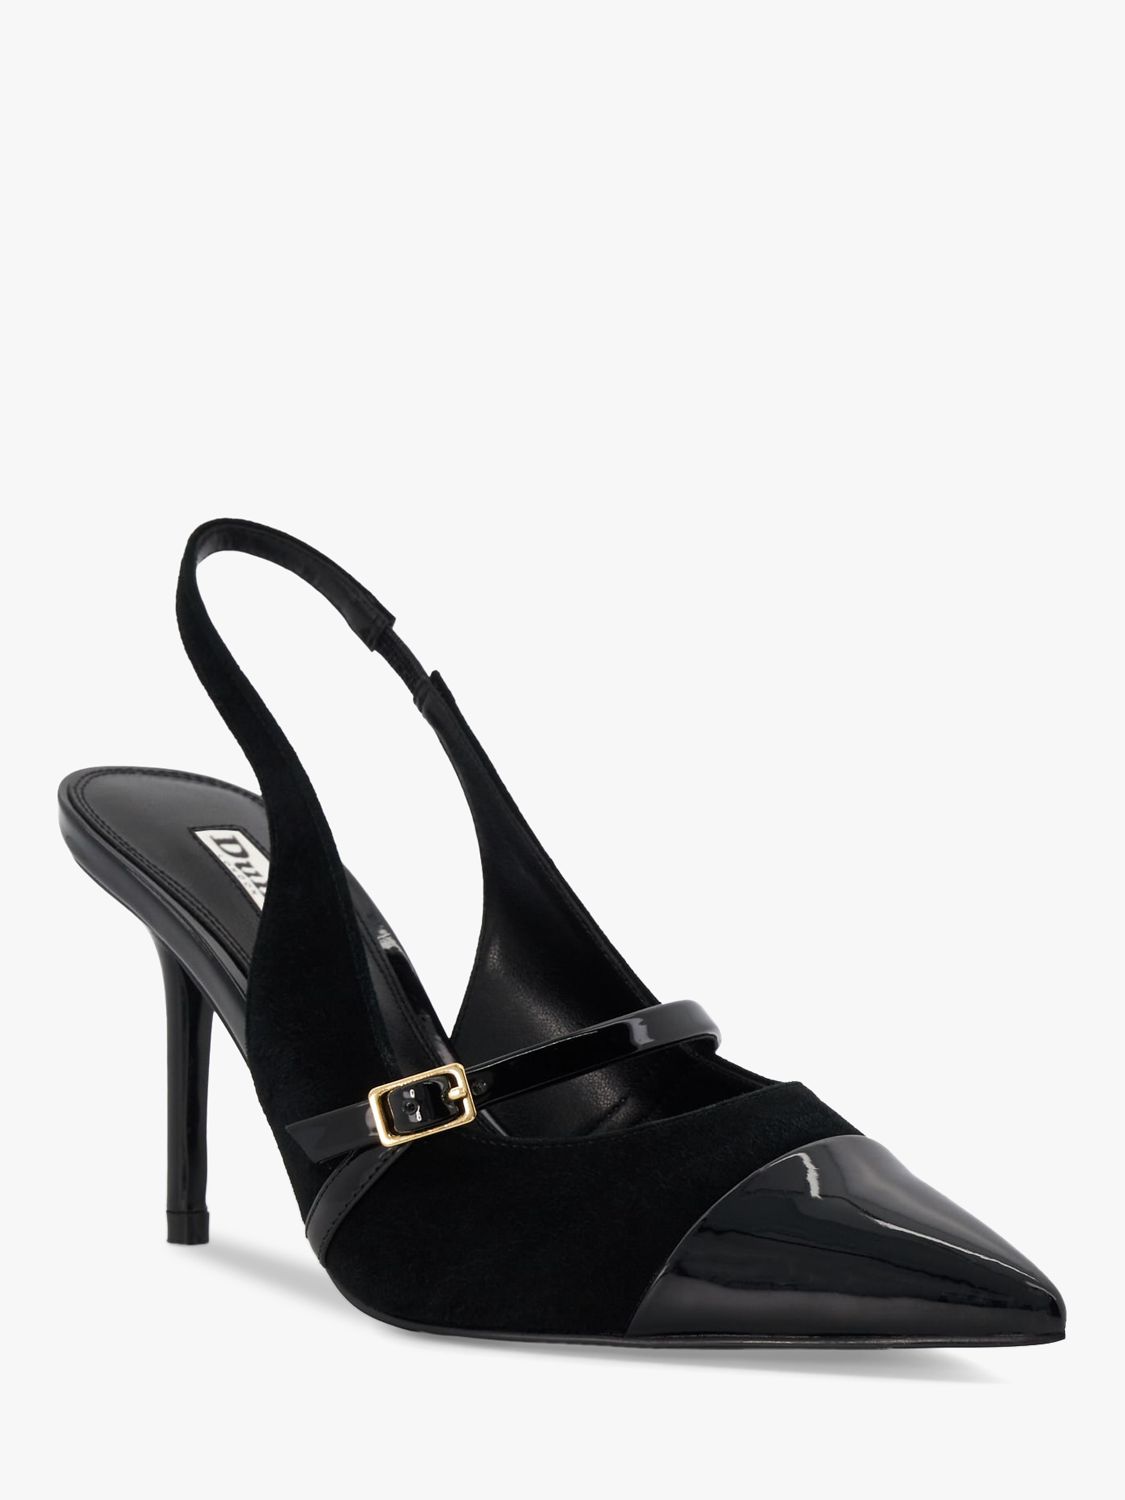 Buy Dune Carisma Suede/Patent Mix Slingback Court Shoes, Black Online at johnlewis.com